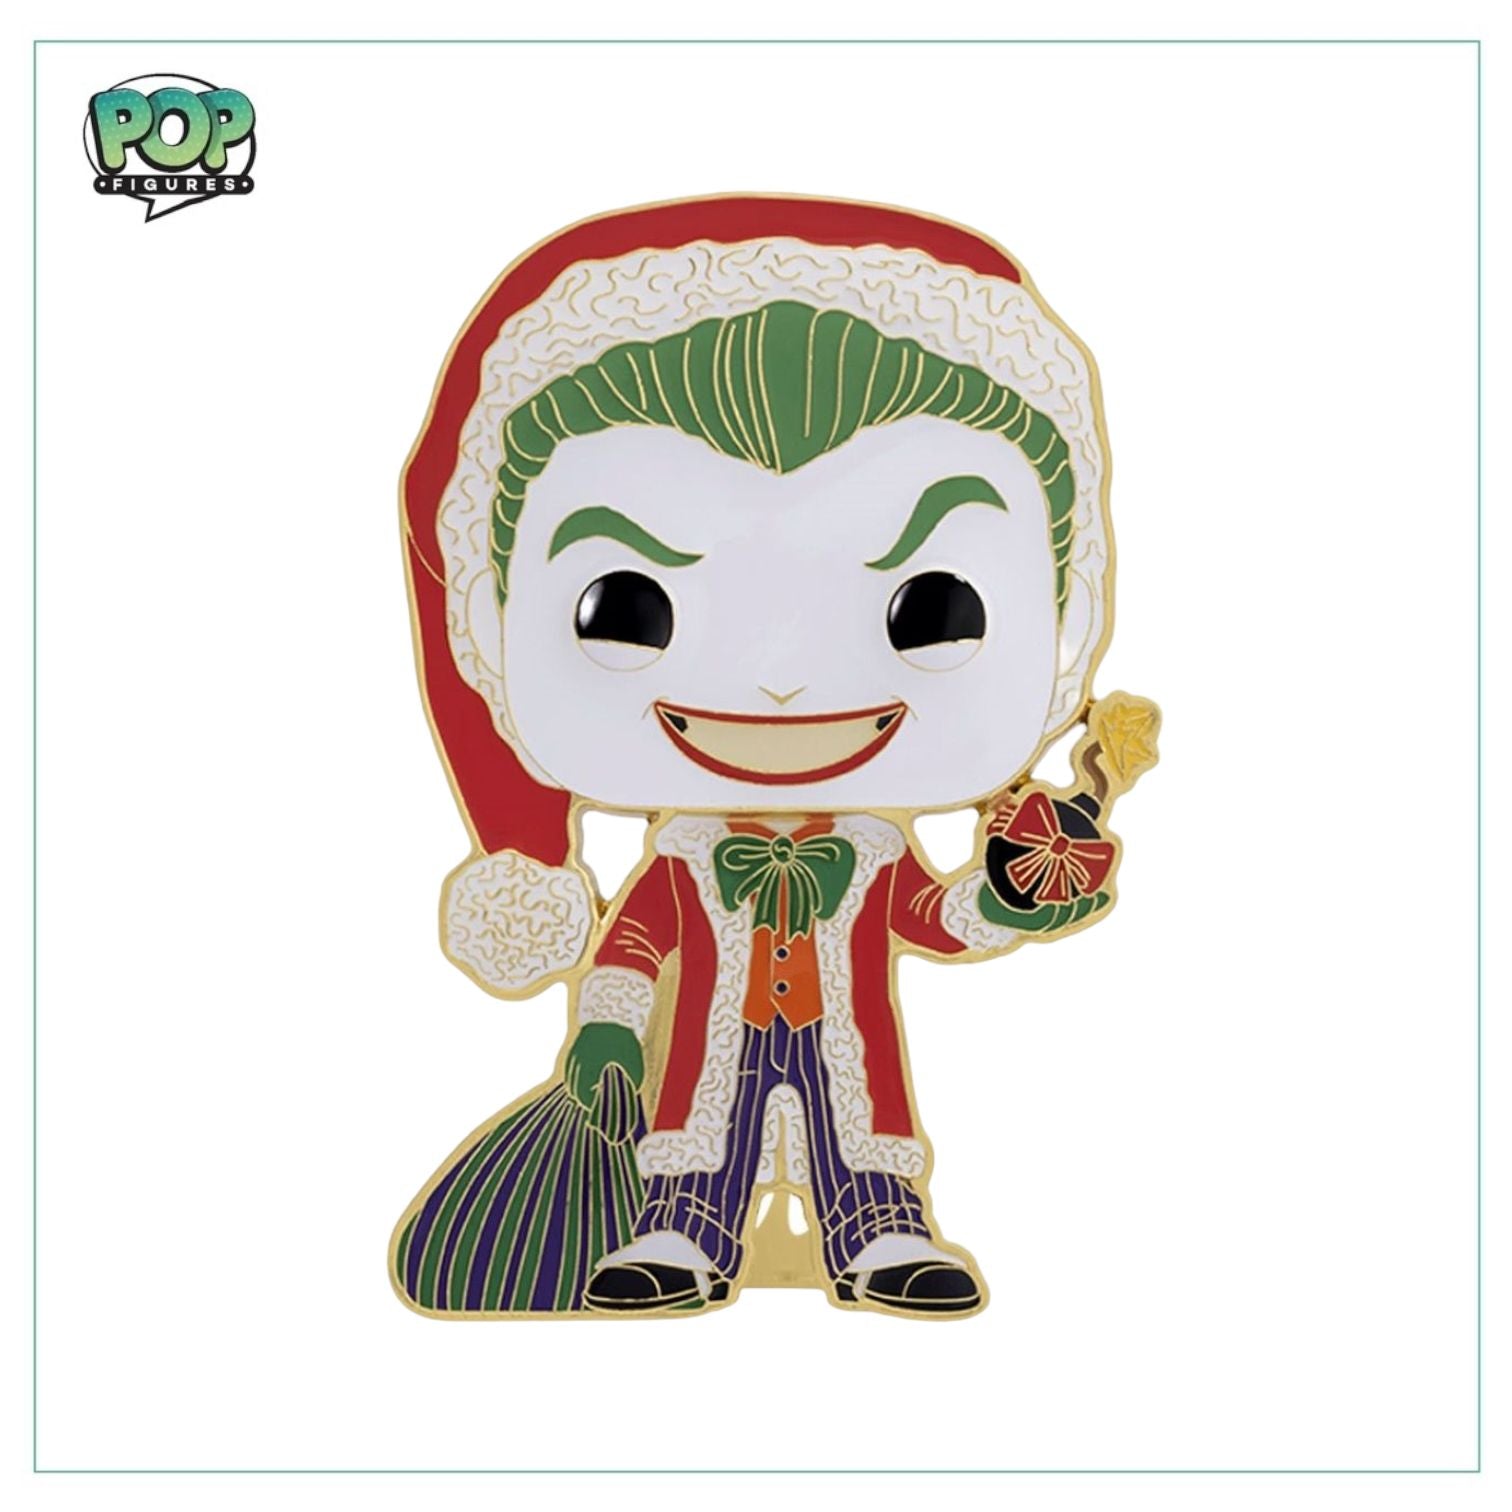 The Joker as Santa #22 Funko Pop Pin! - DC: Holiday - PREORDER